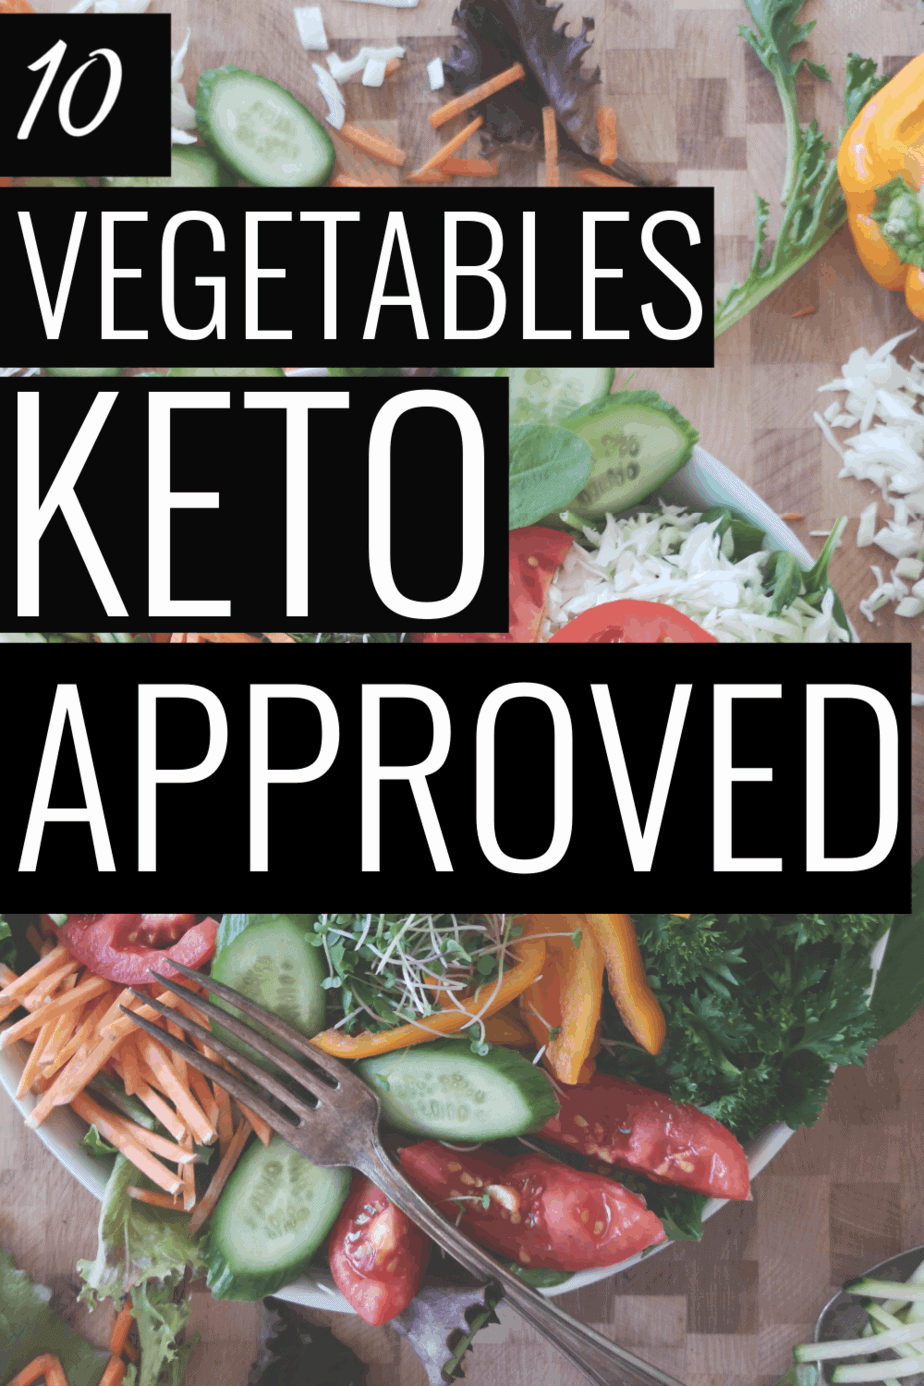 Keto approved veggies